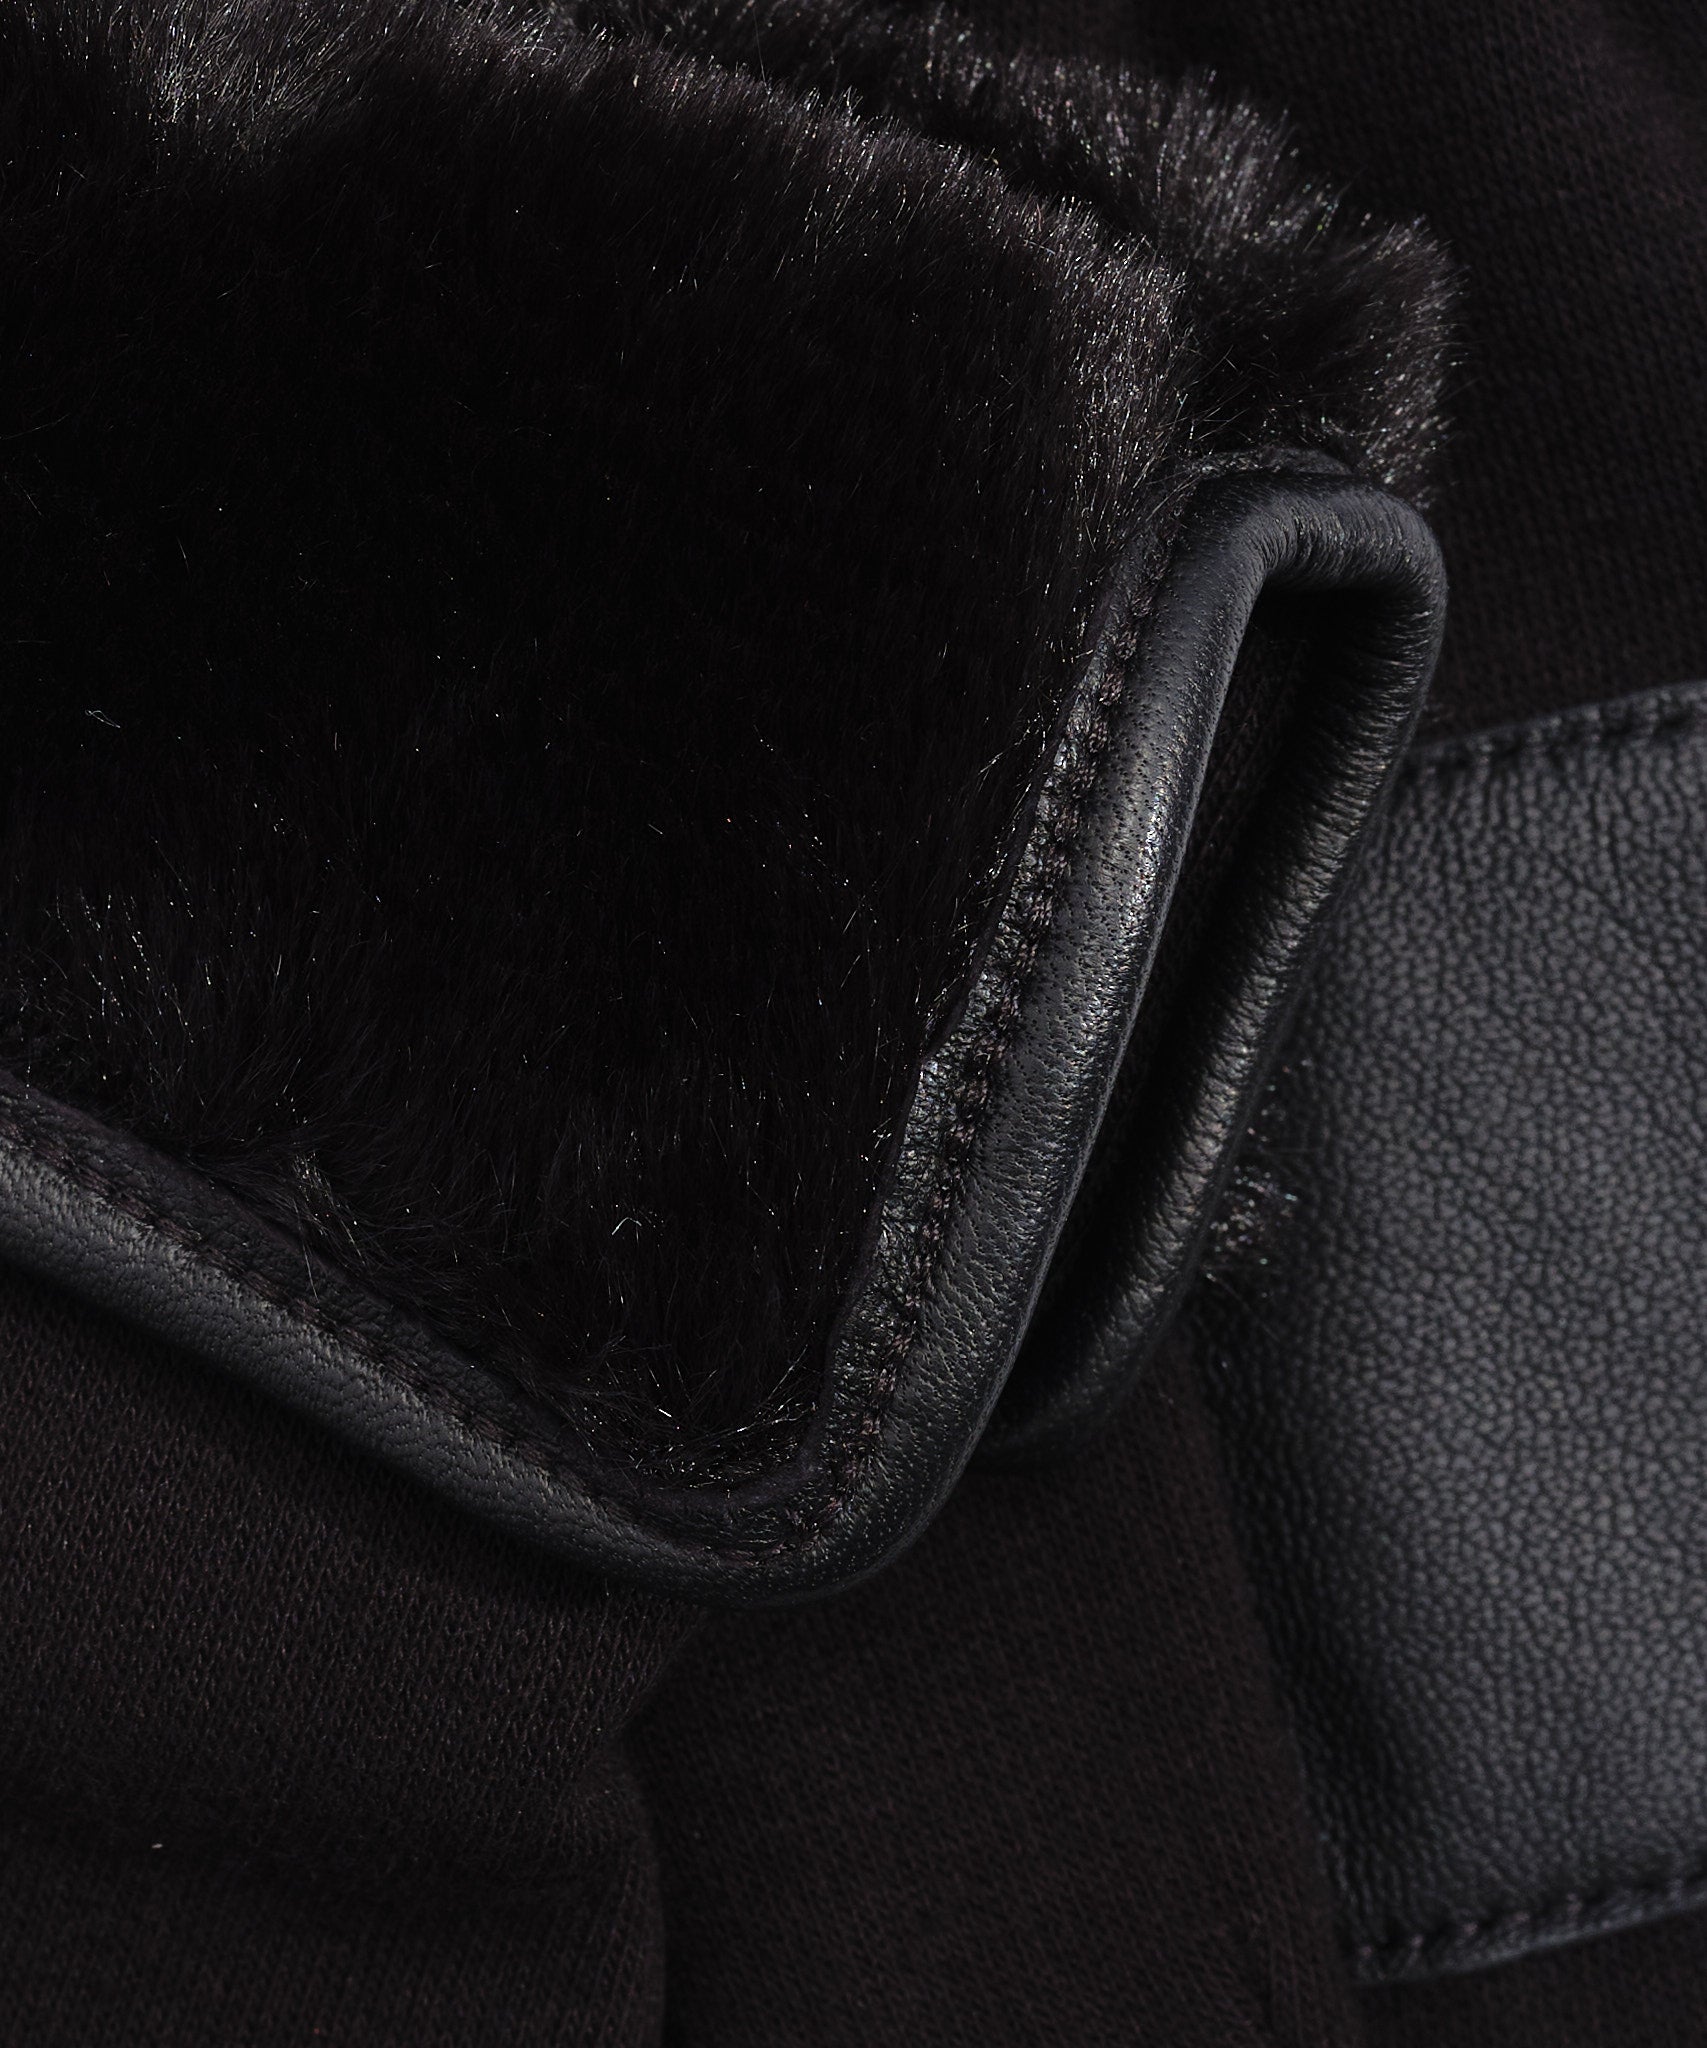 Fold Down Faux Fur Cuff Glove in color Black